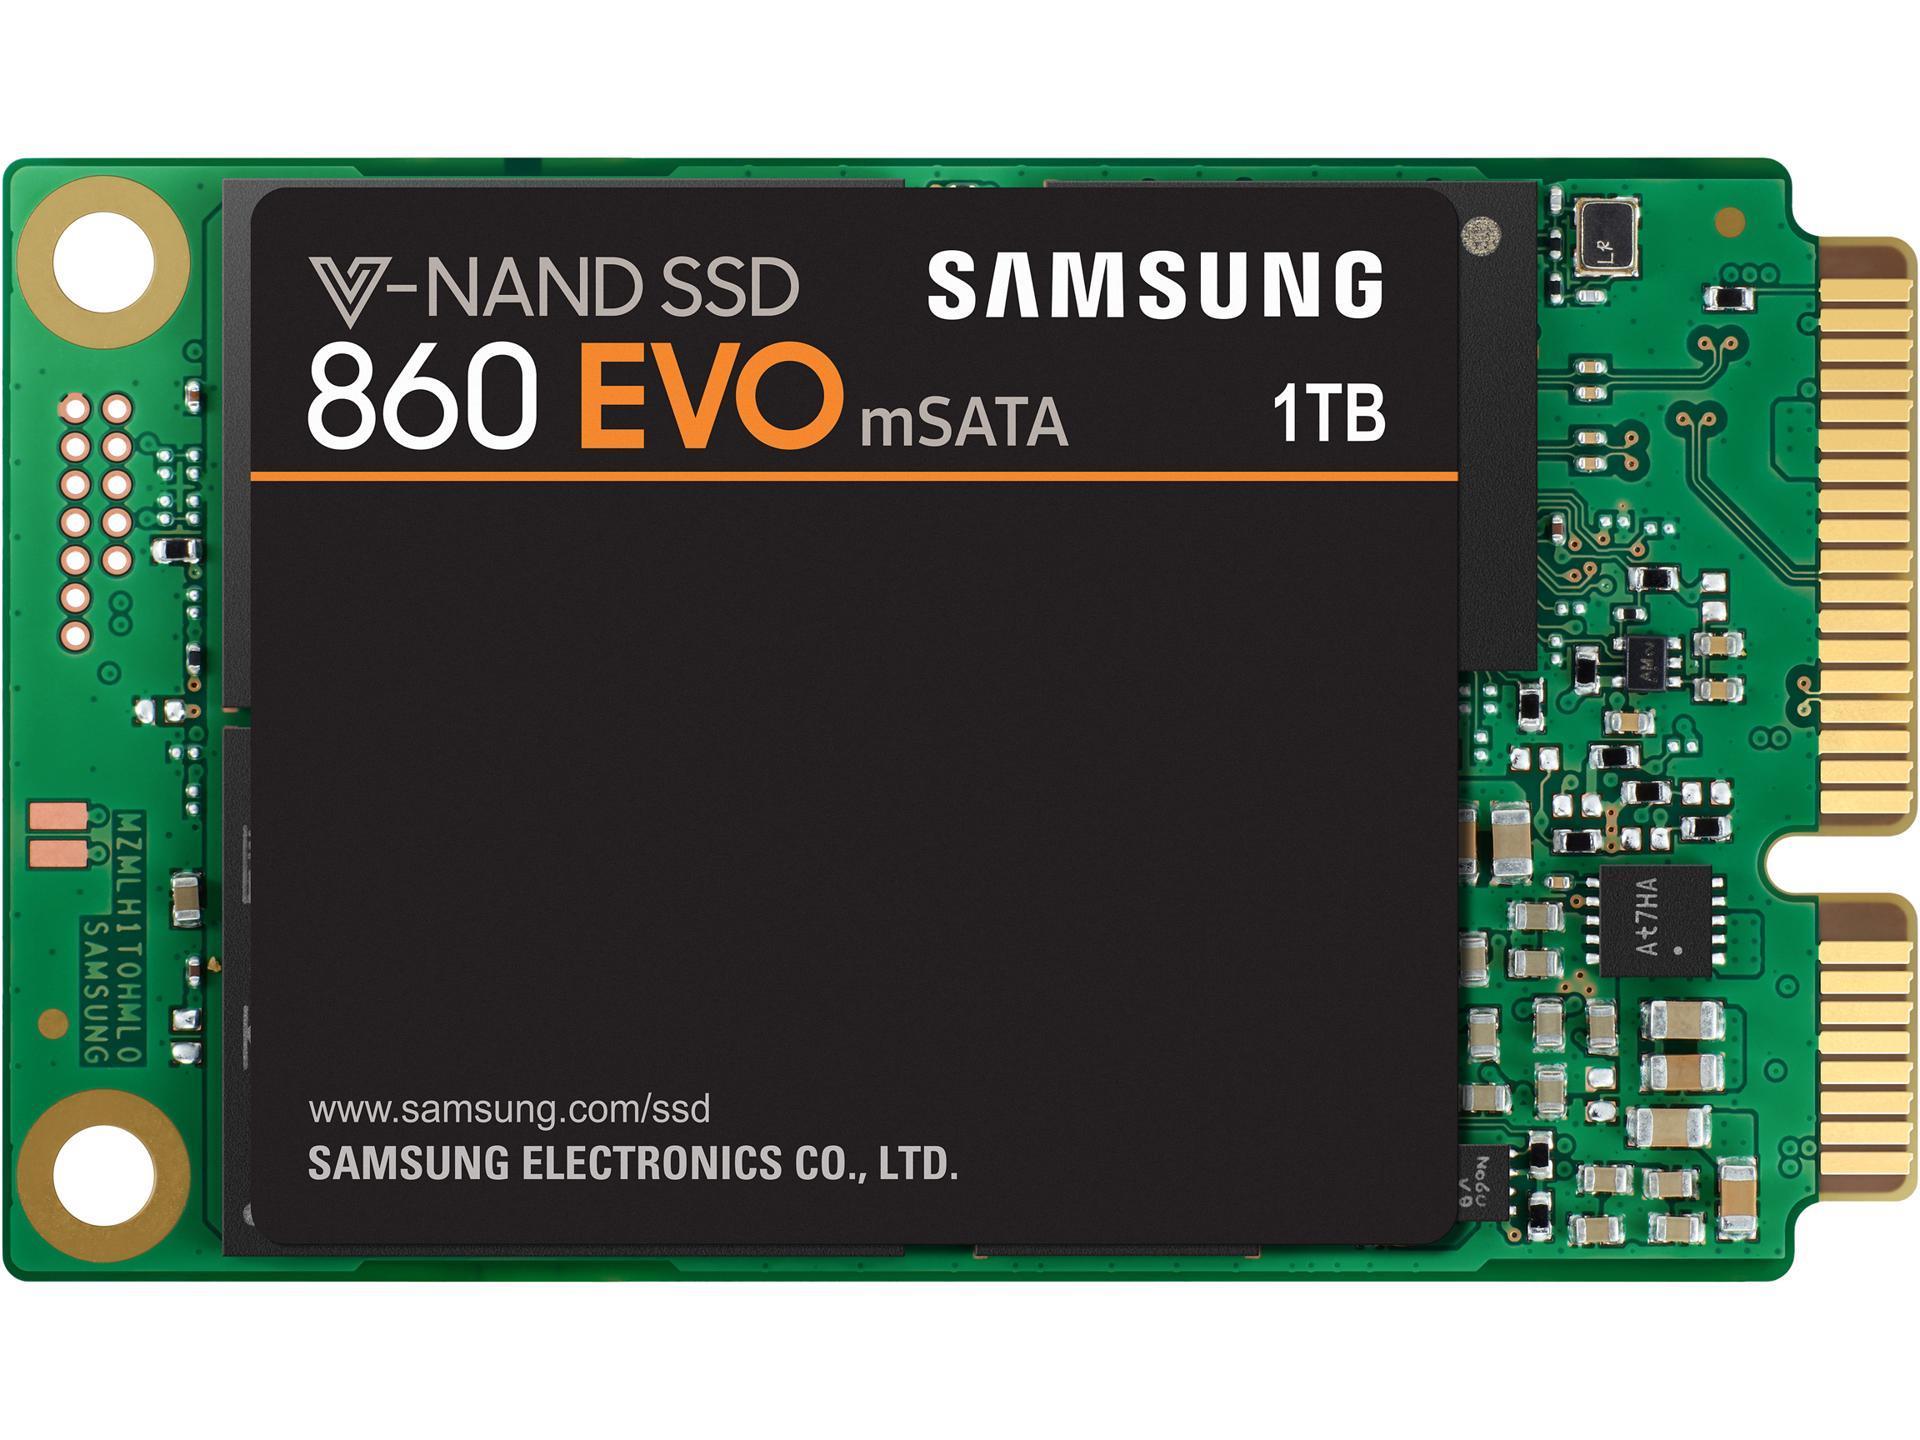 Ổ cứng SSD Samsung 860 Evo 1TB mSATA slide image 0